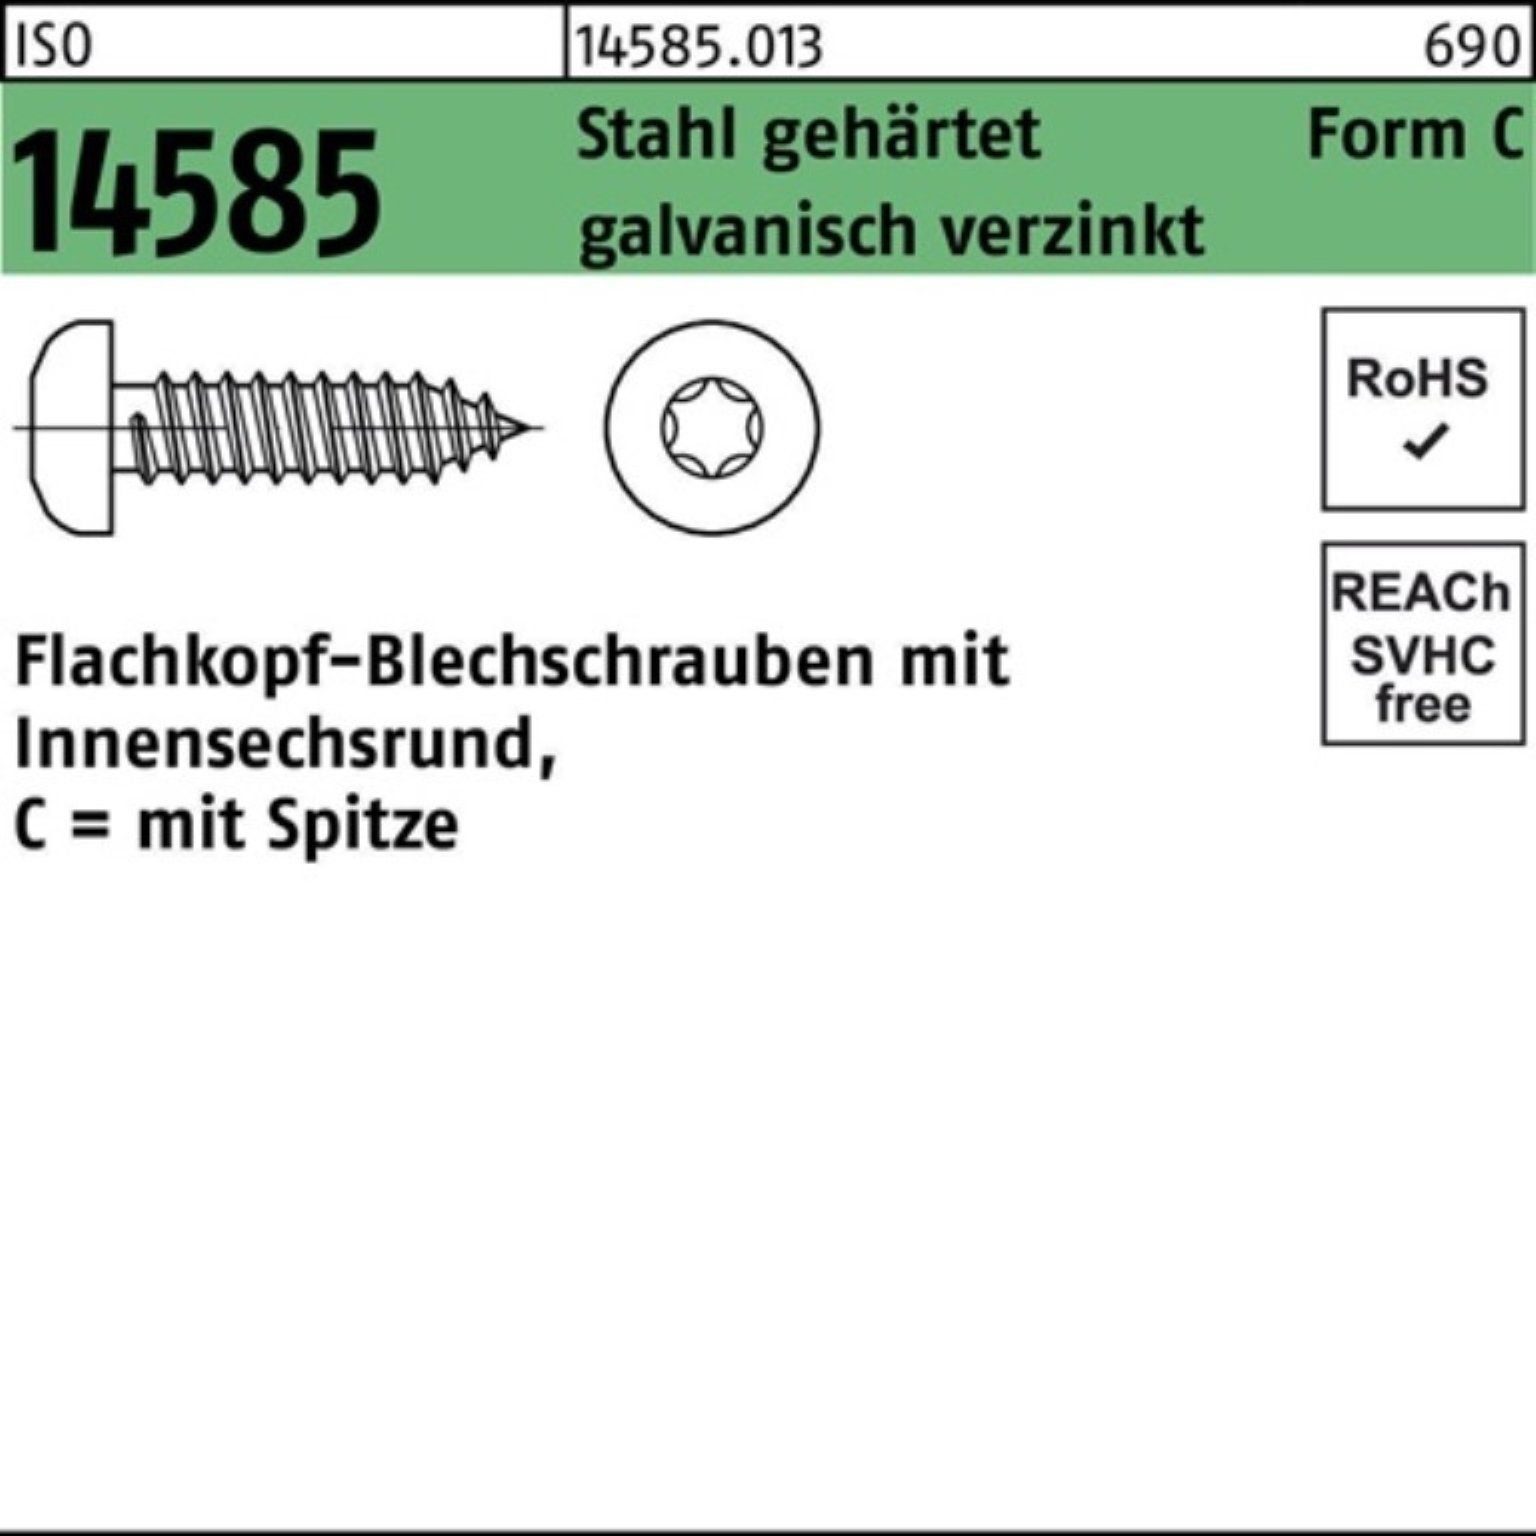 ISO Reyher geh. 250er Blechschraube 4,8x60 Blechschraube Pack -C-T25 14585 Stahl ISR/Spitze